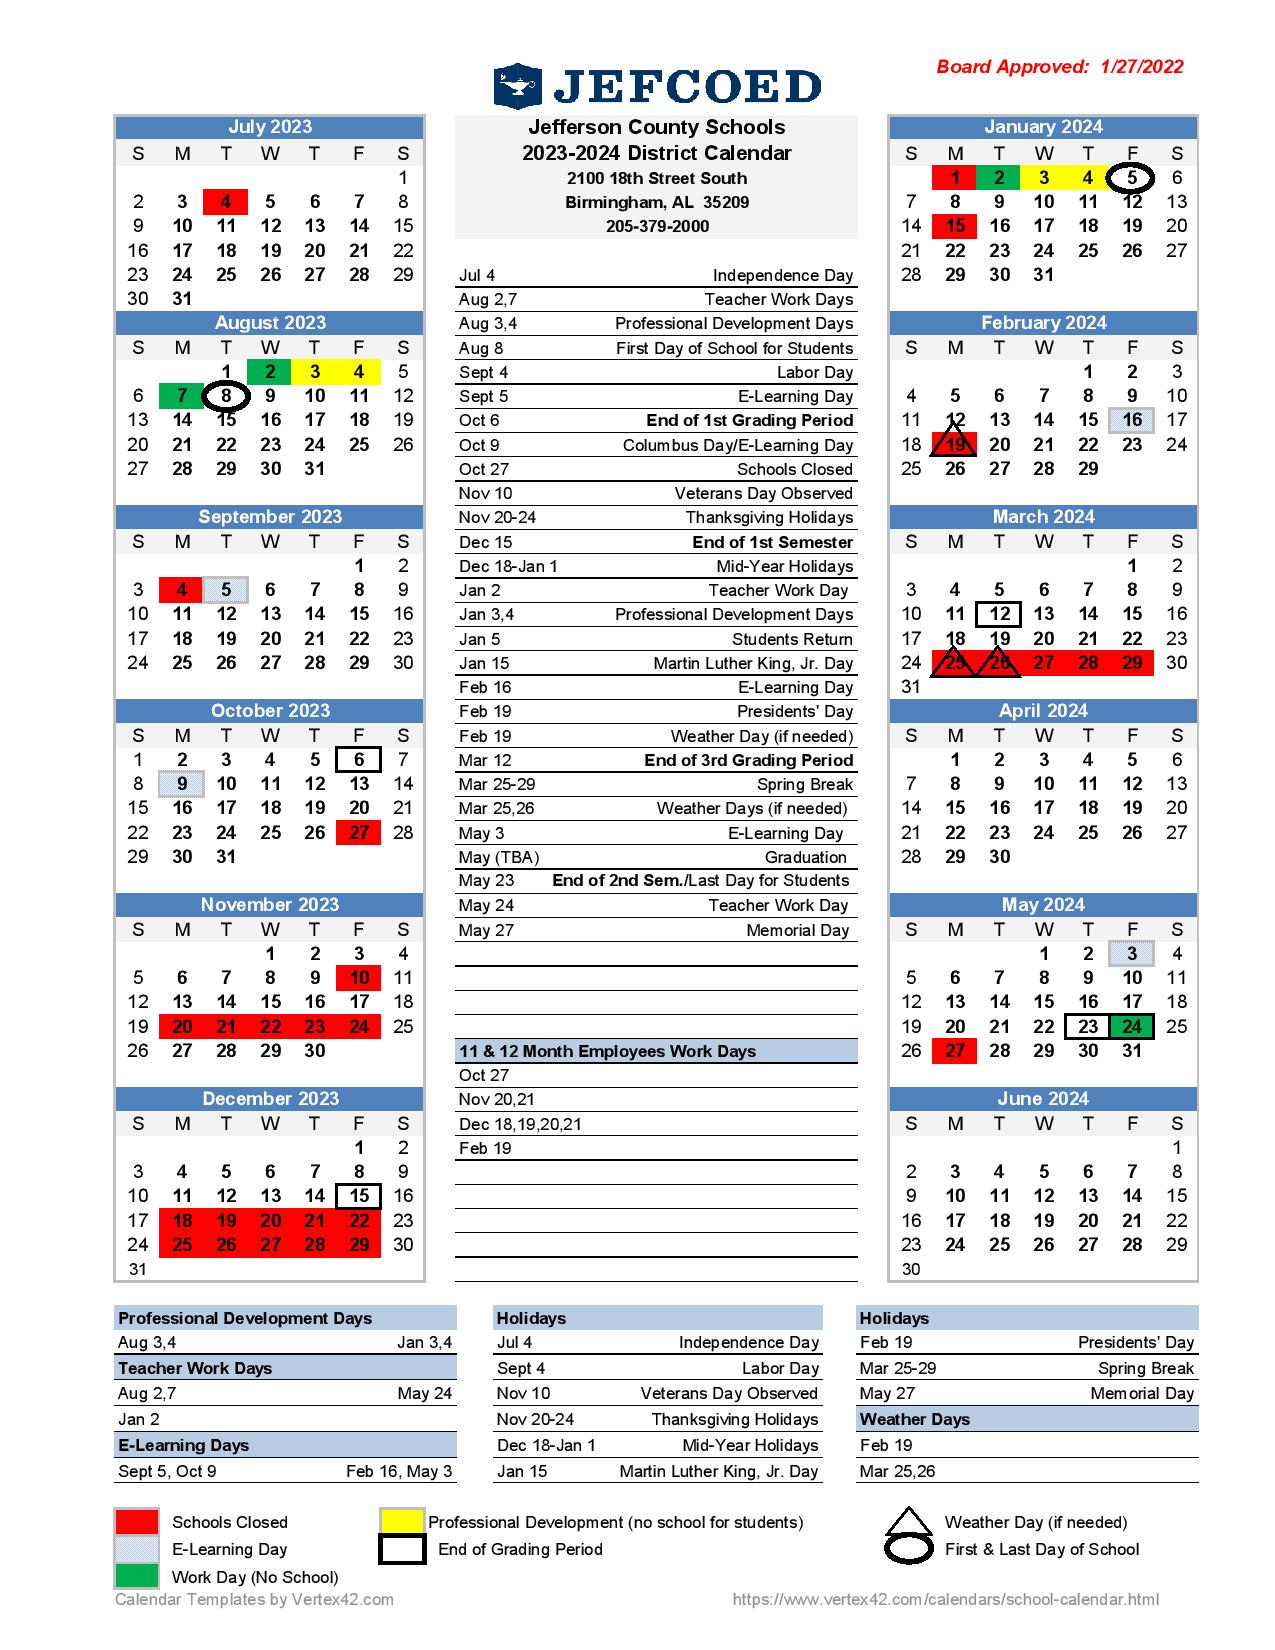 Jefferson County Schools Calendar Holidays 2023 2024 PDF